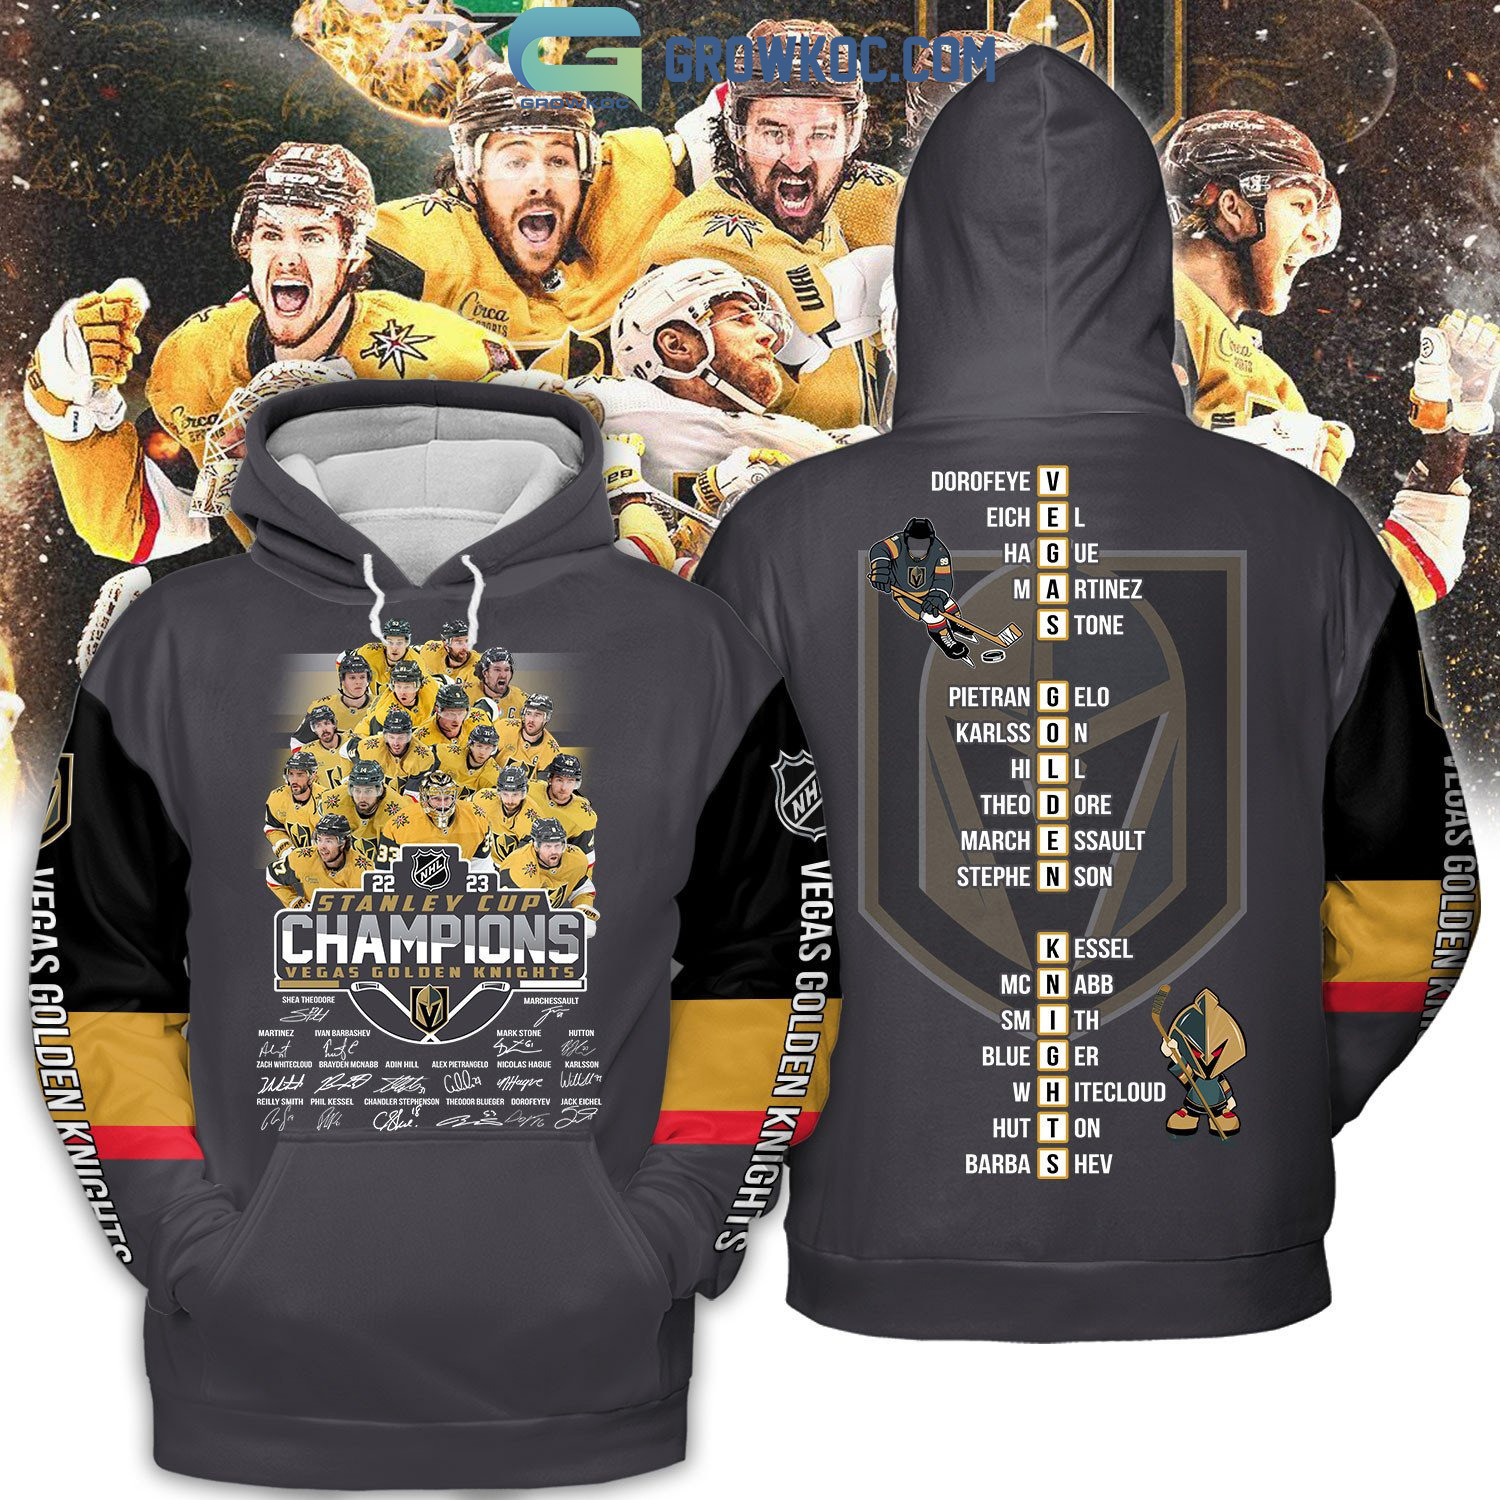 Pittsburgh Penguins NHL Special Jack Skellington Halloween Concepts Hoodie  T Shirt - Growkoc